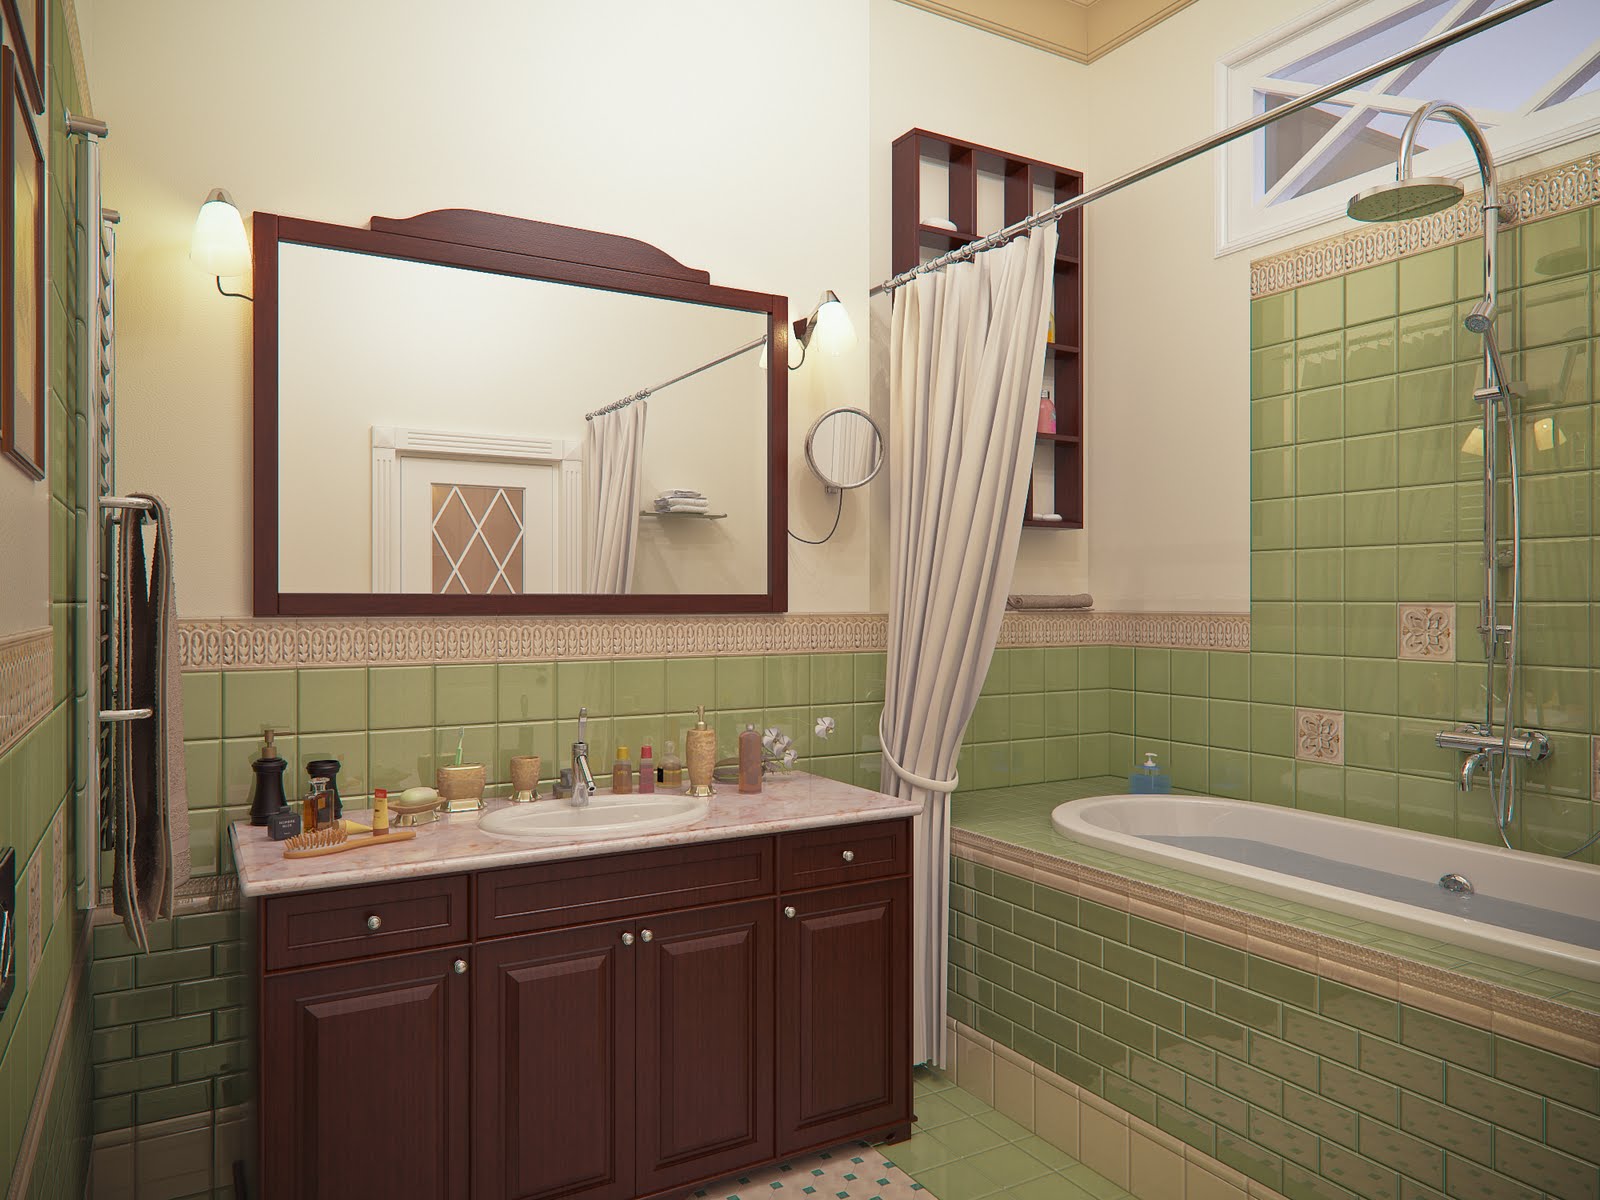 http://sam-sebe-dizainer.com/public/images/Ремонтируем ванную качественно